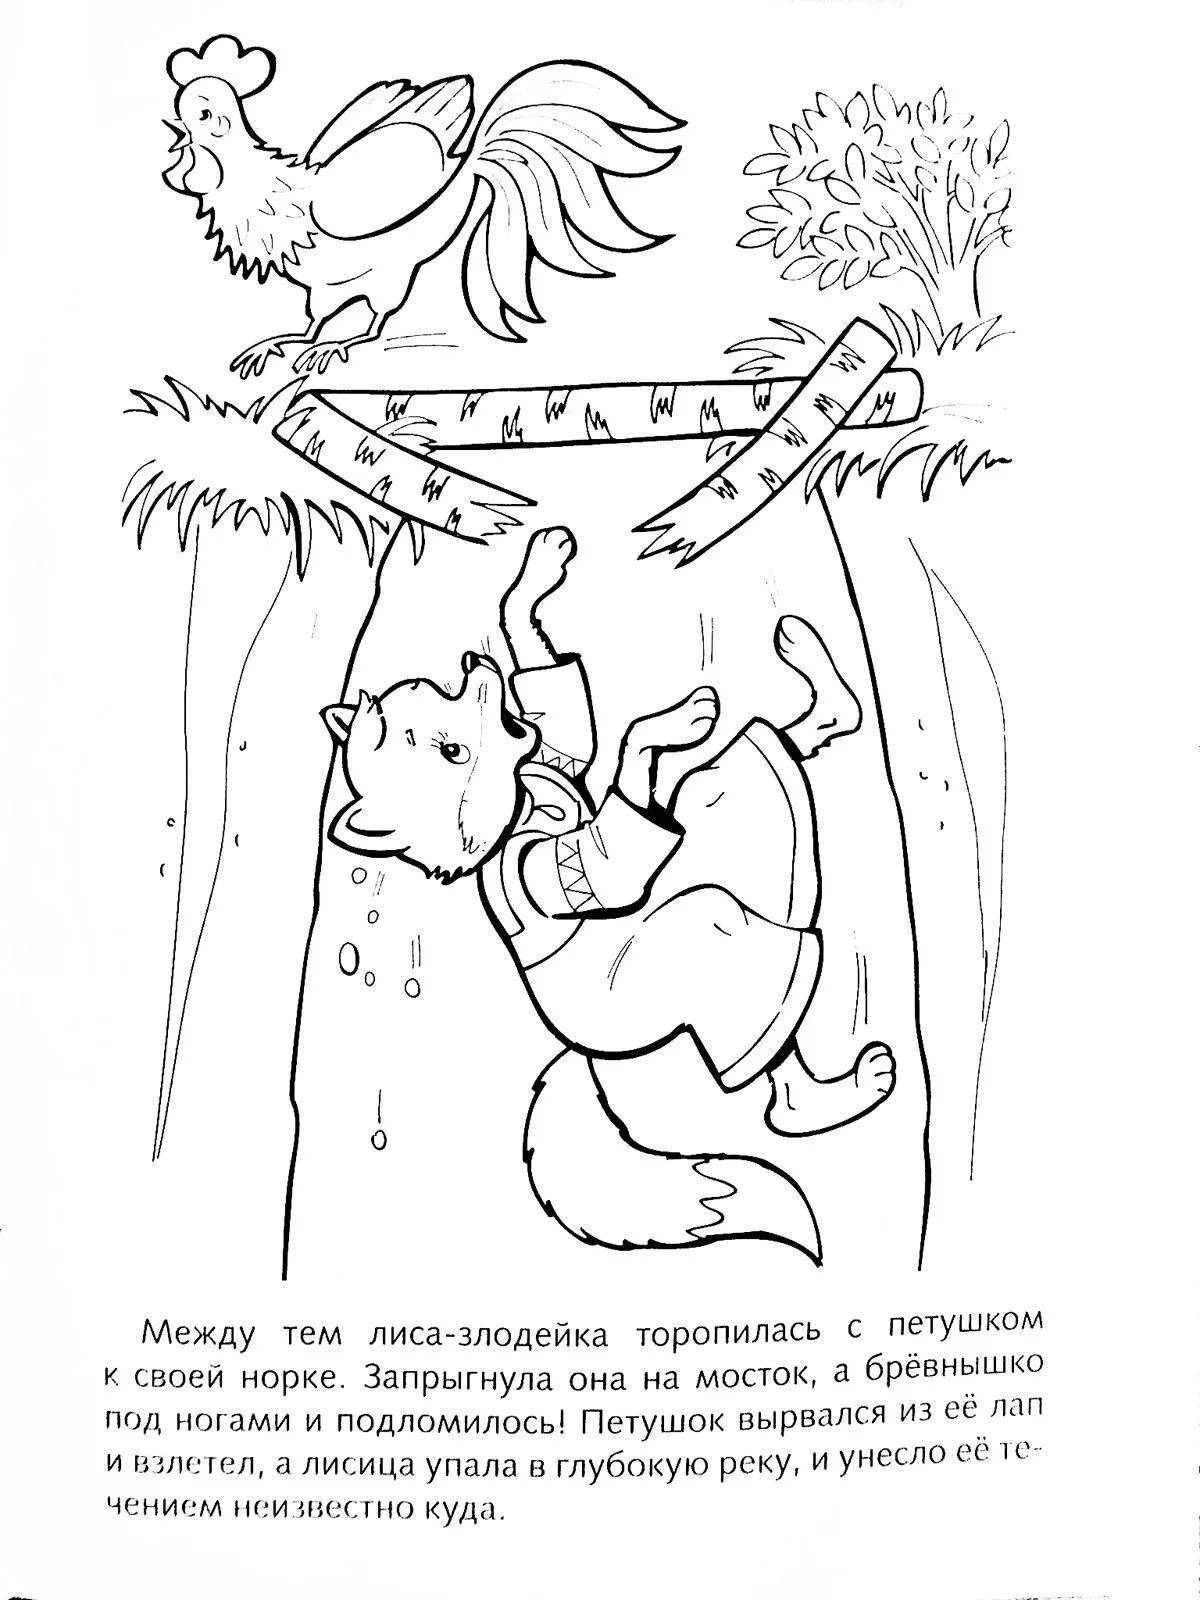 Coloring book dreamy Russian folk tale